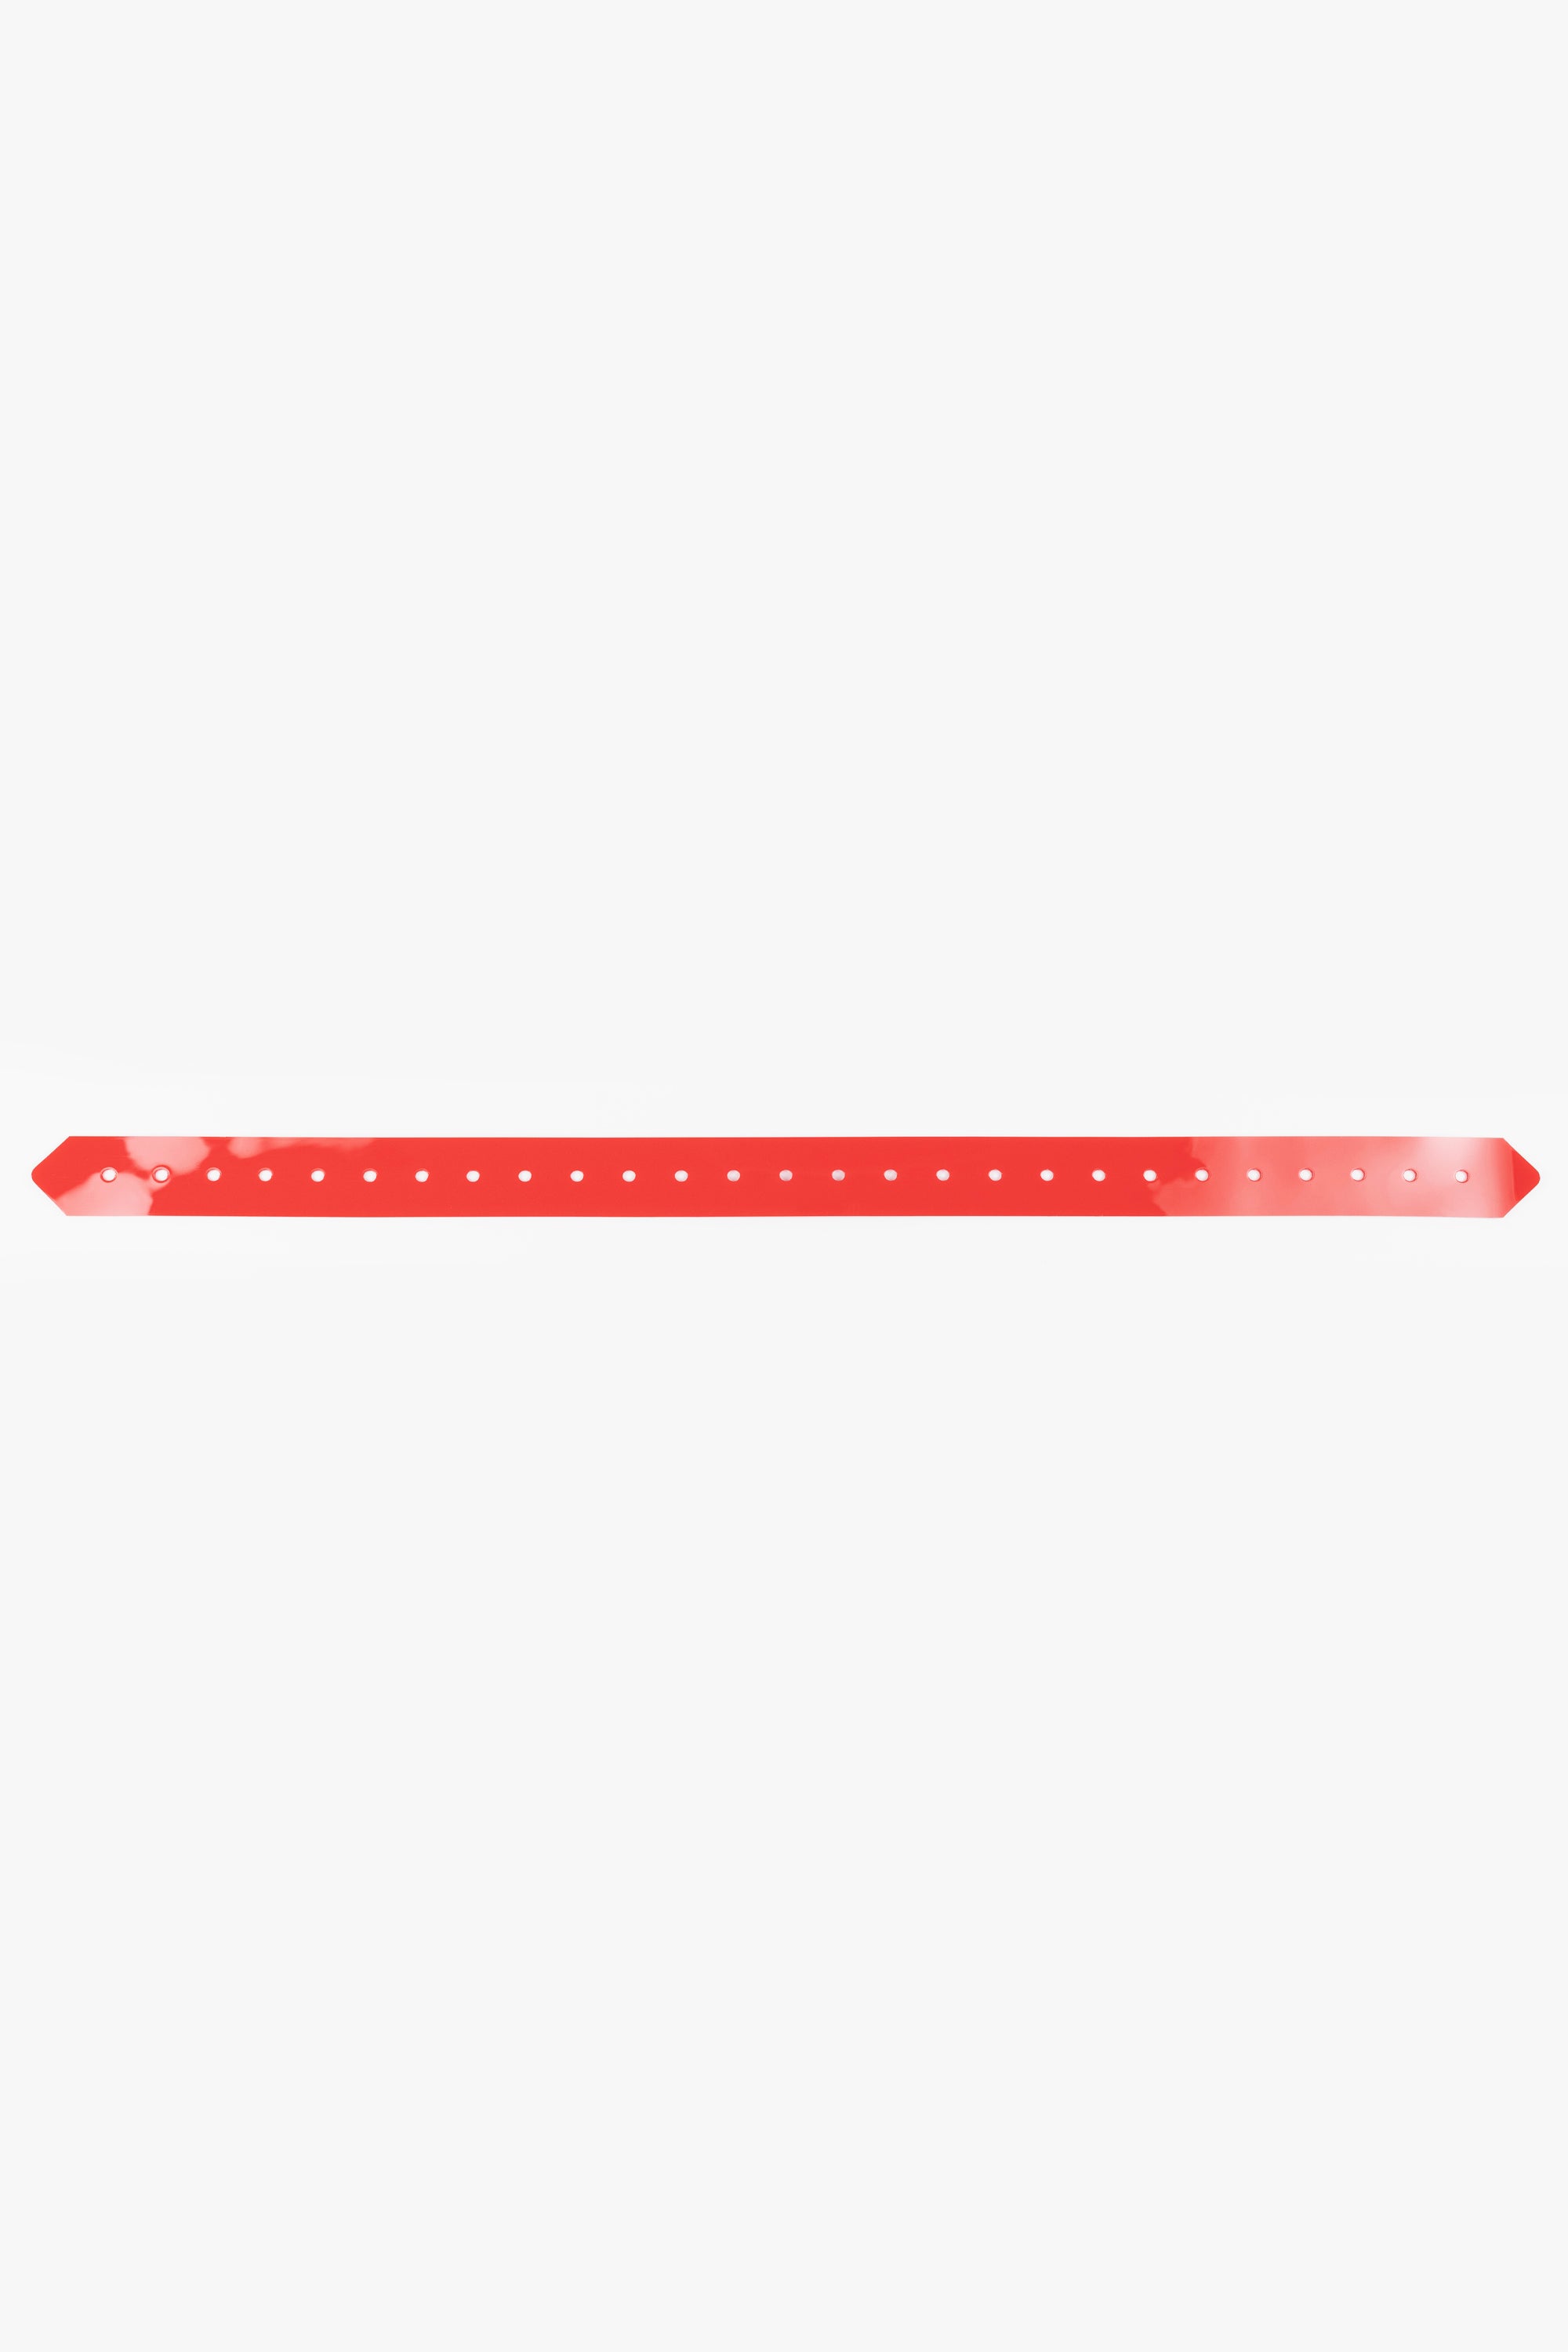 Connection strap, segufix items compatible 70 cm, red/chrome